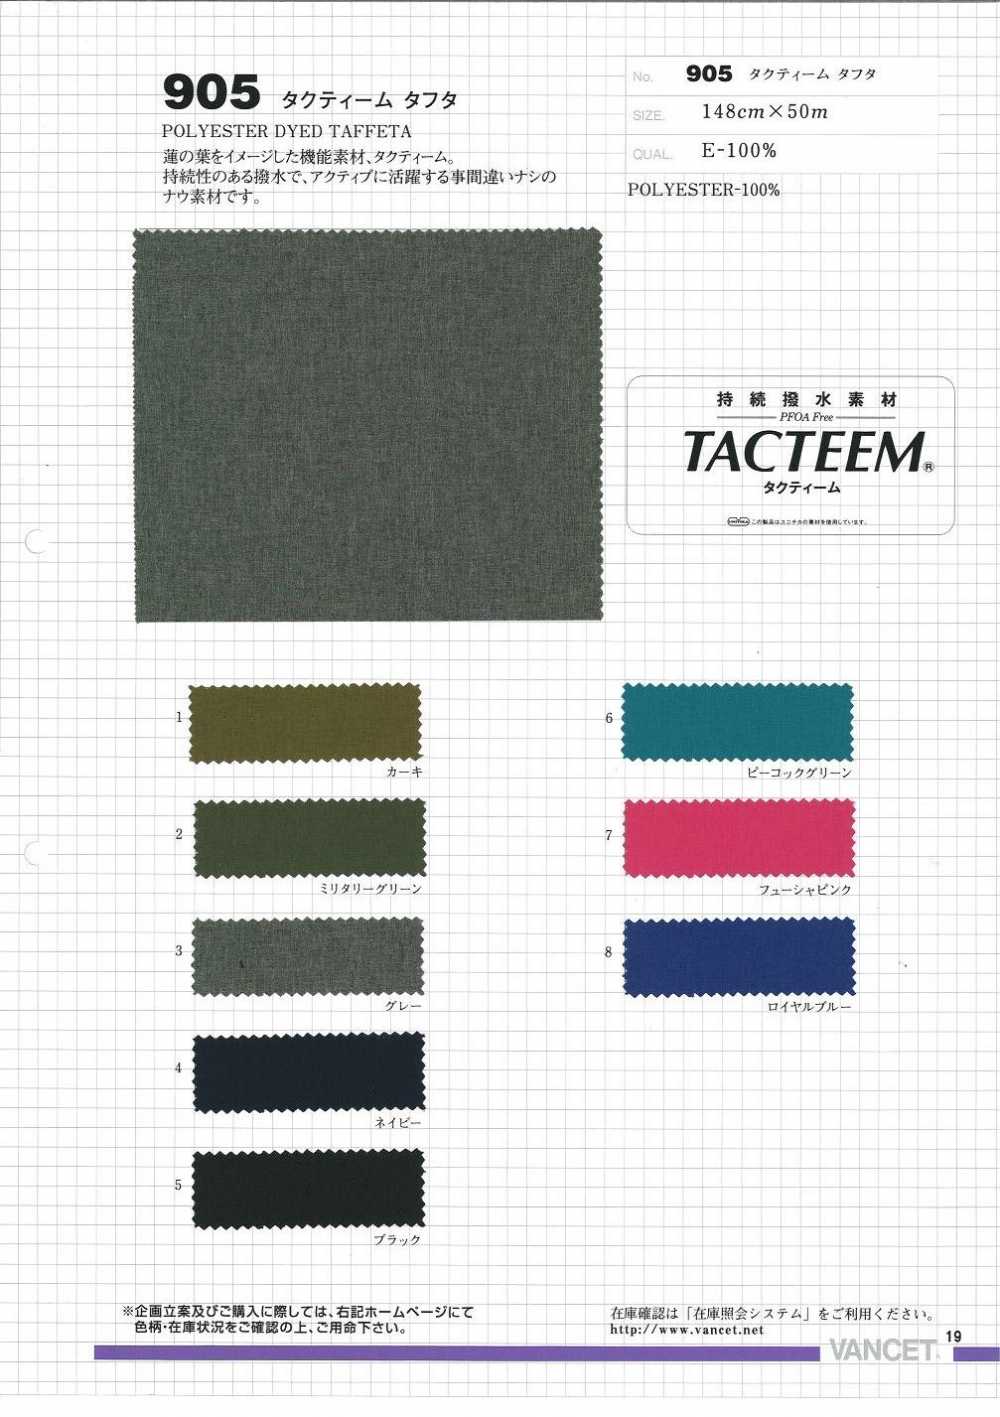 905 Tactim Taffeta[Textile / Fabric] VANCET